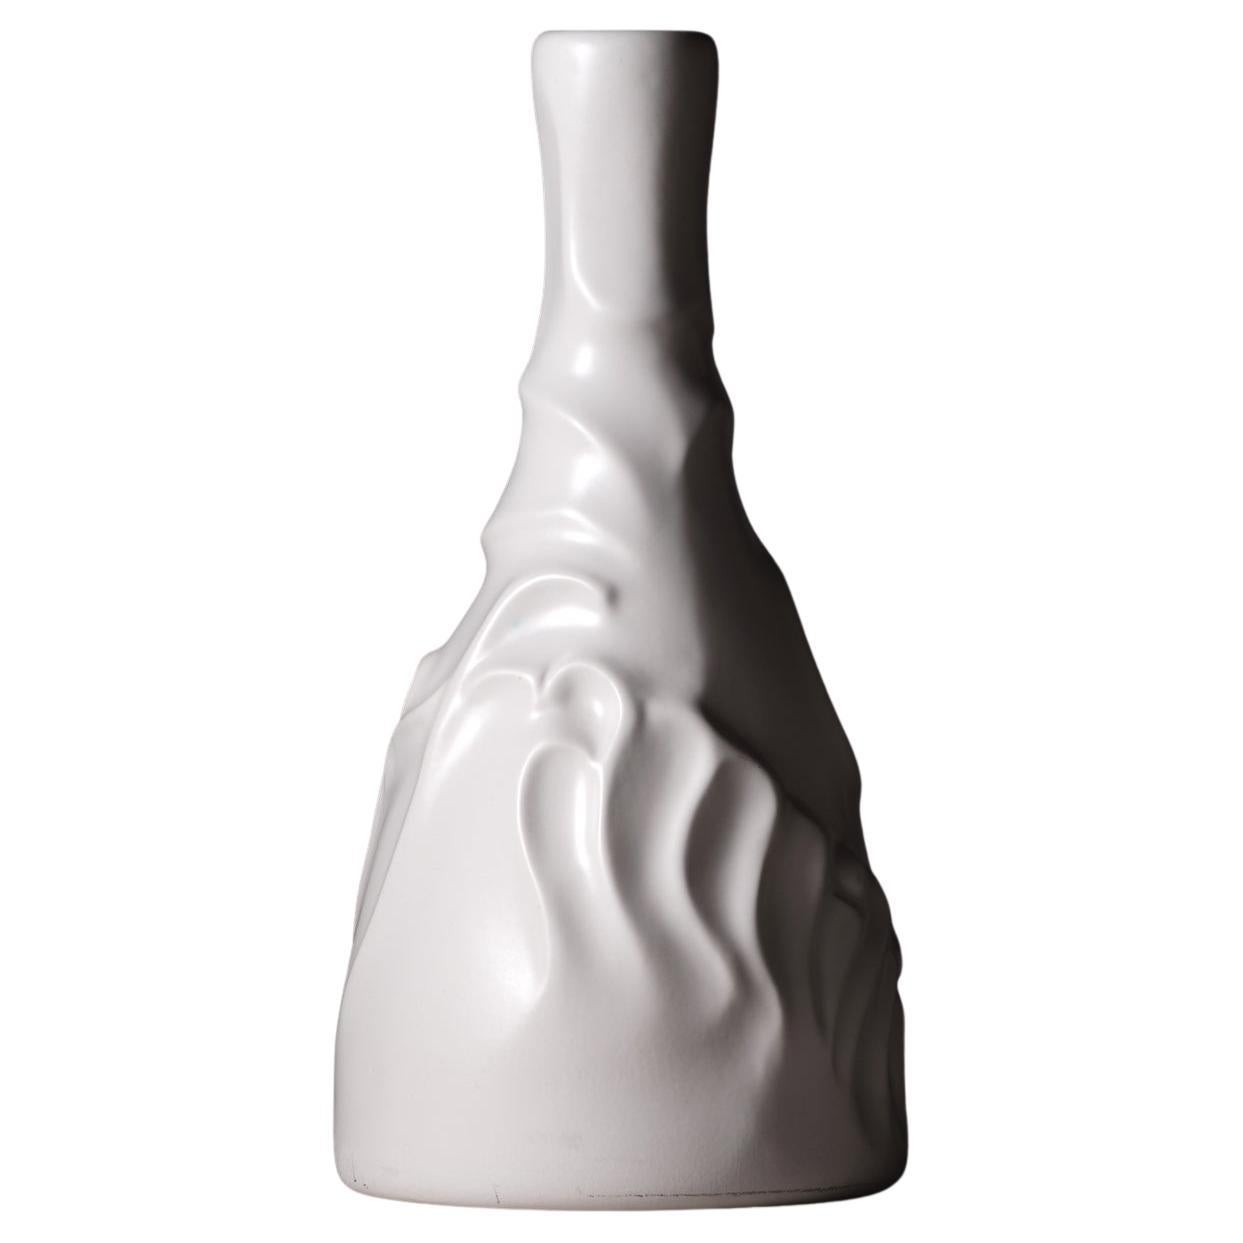 White Ceramic Casa De Familia Bottle Vase by Josep Maria Jujol, Spanish design